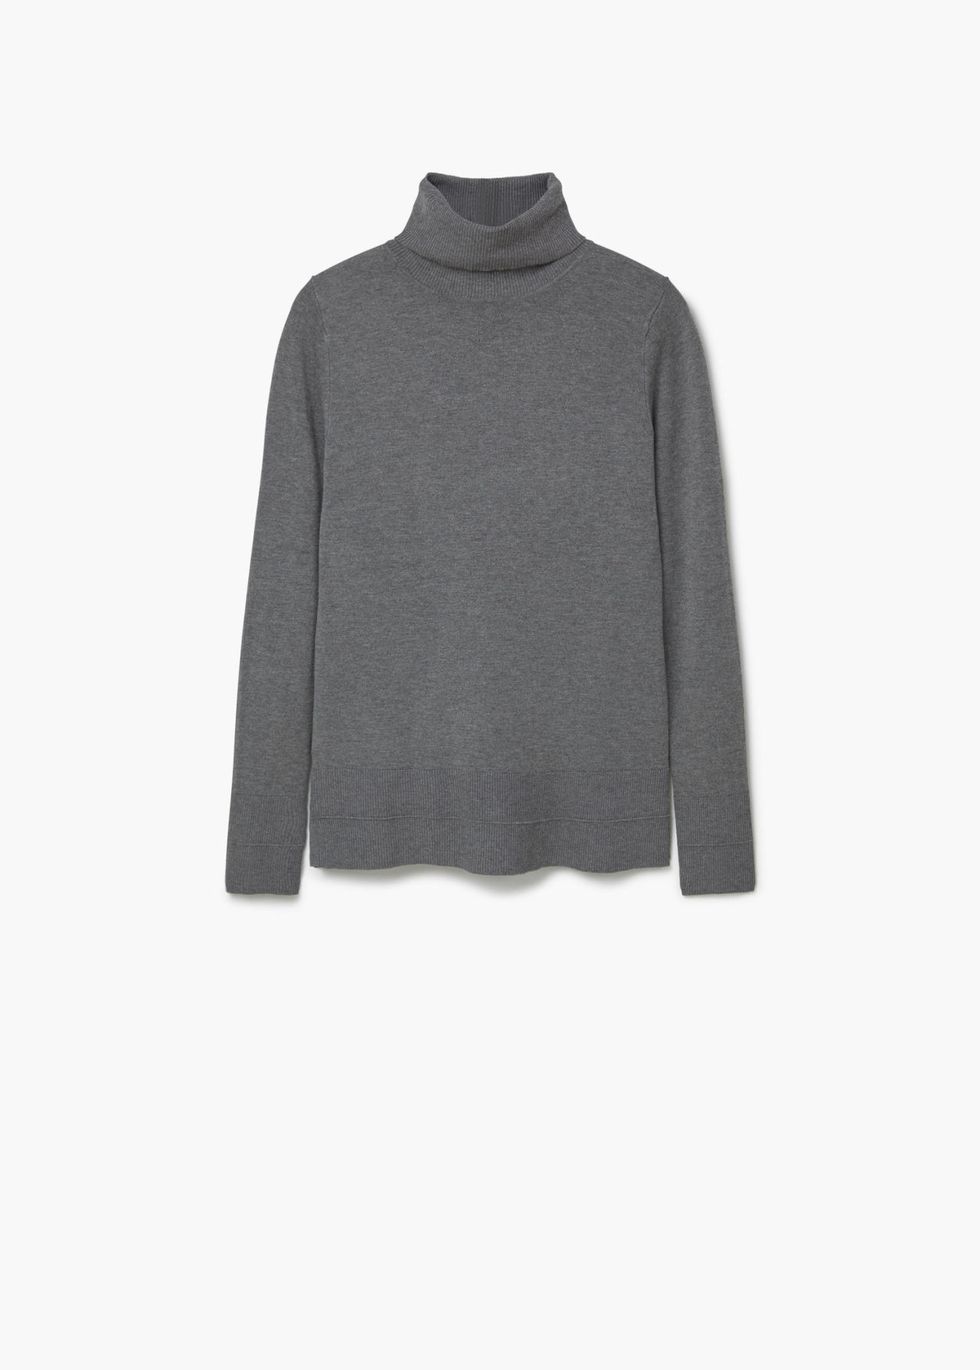 Sleeve, Textile, Grey, Sweater, Active shirt, Clothes hanger, 